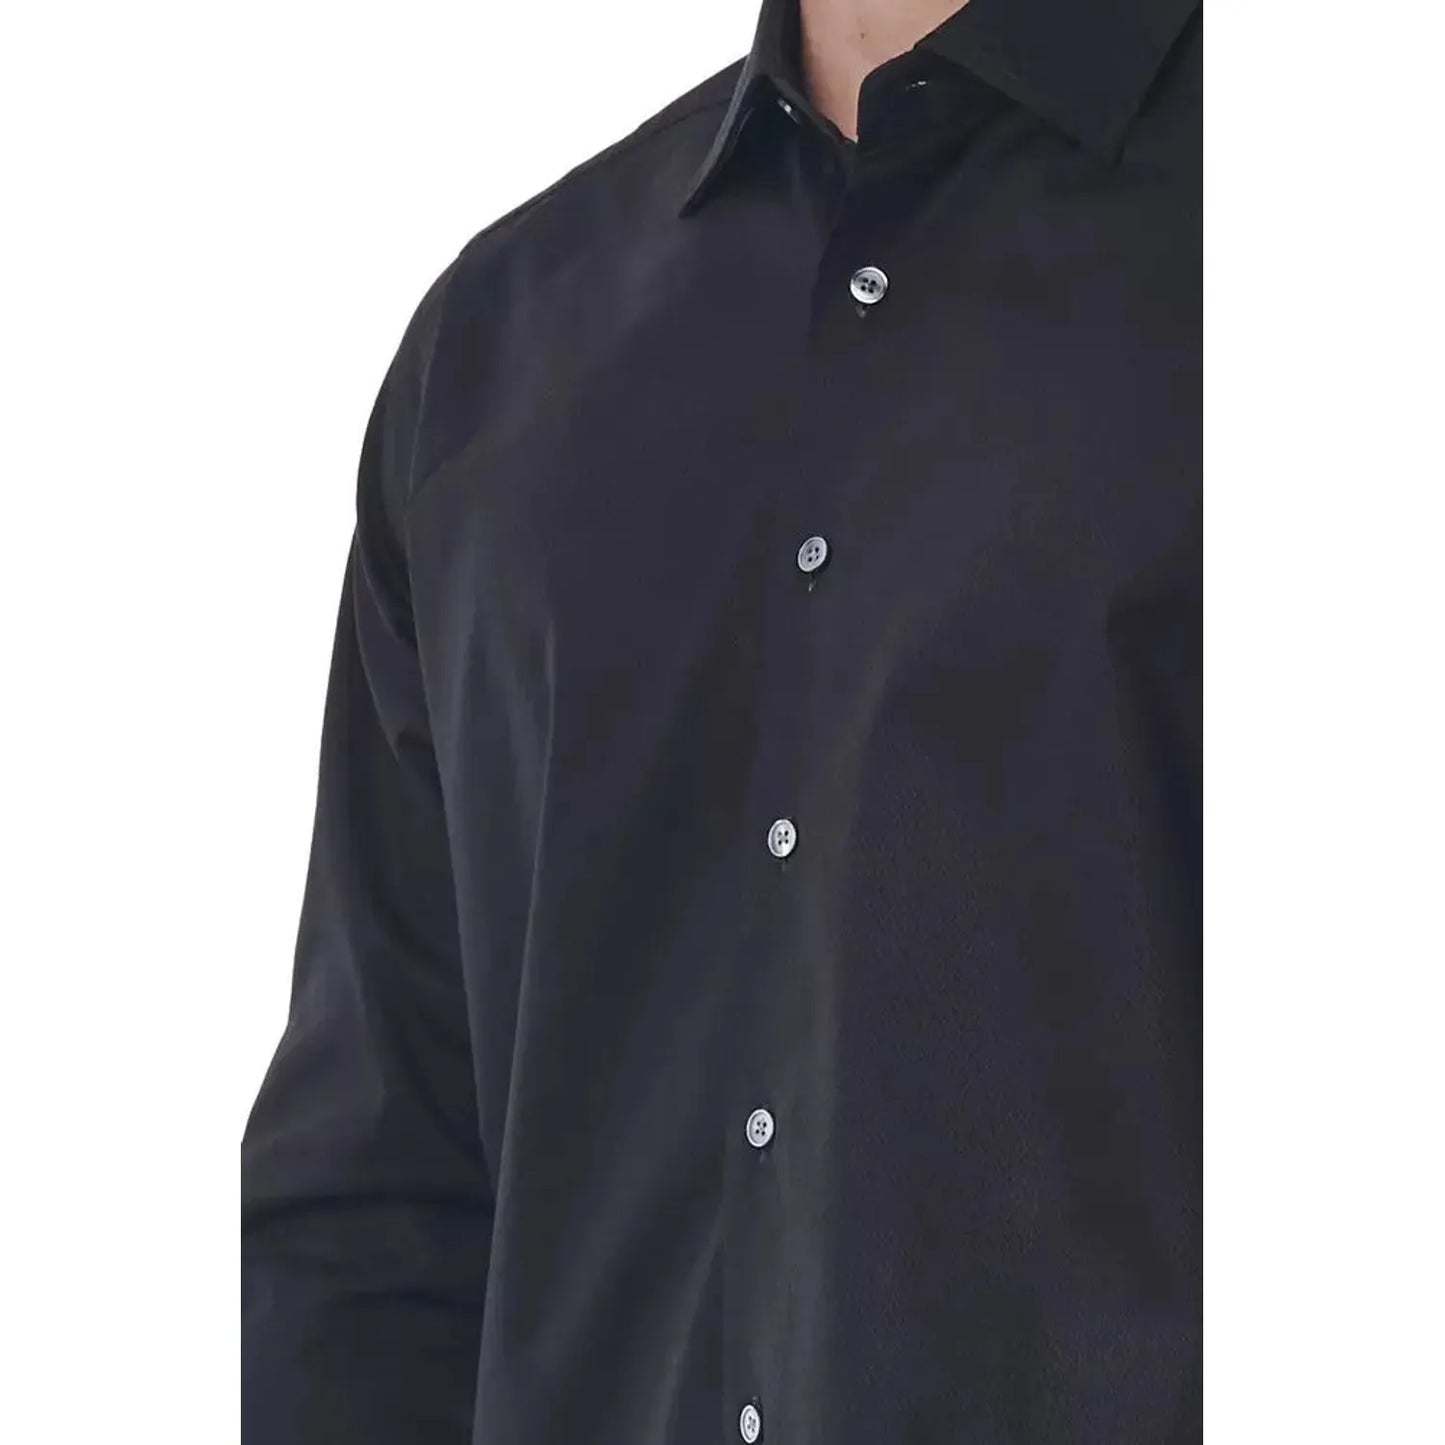 Bagutta Elegant Black Cotton Italian Shirt black-cotton-shirt-20